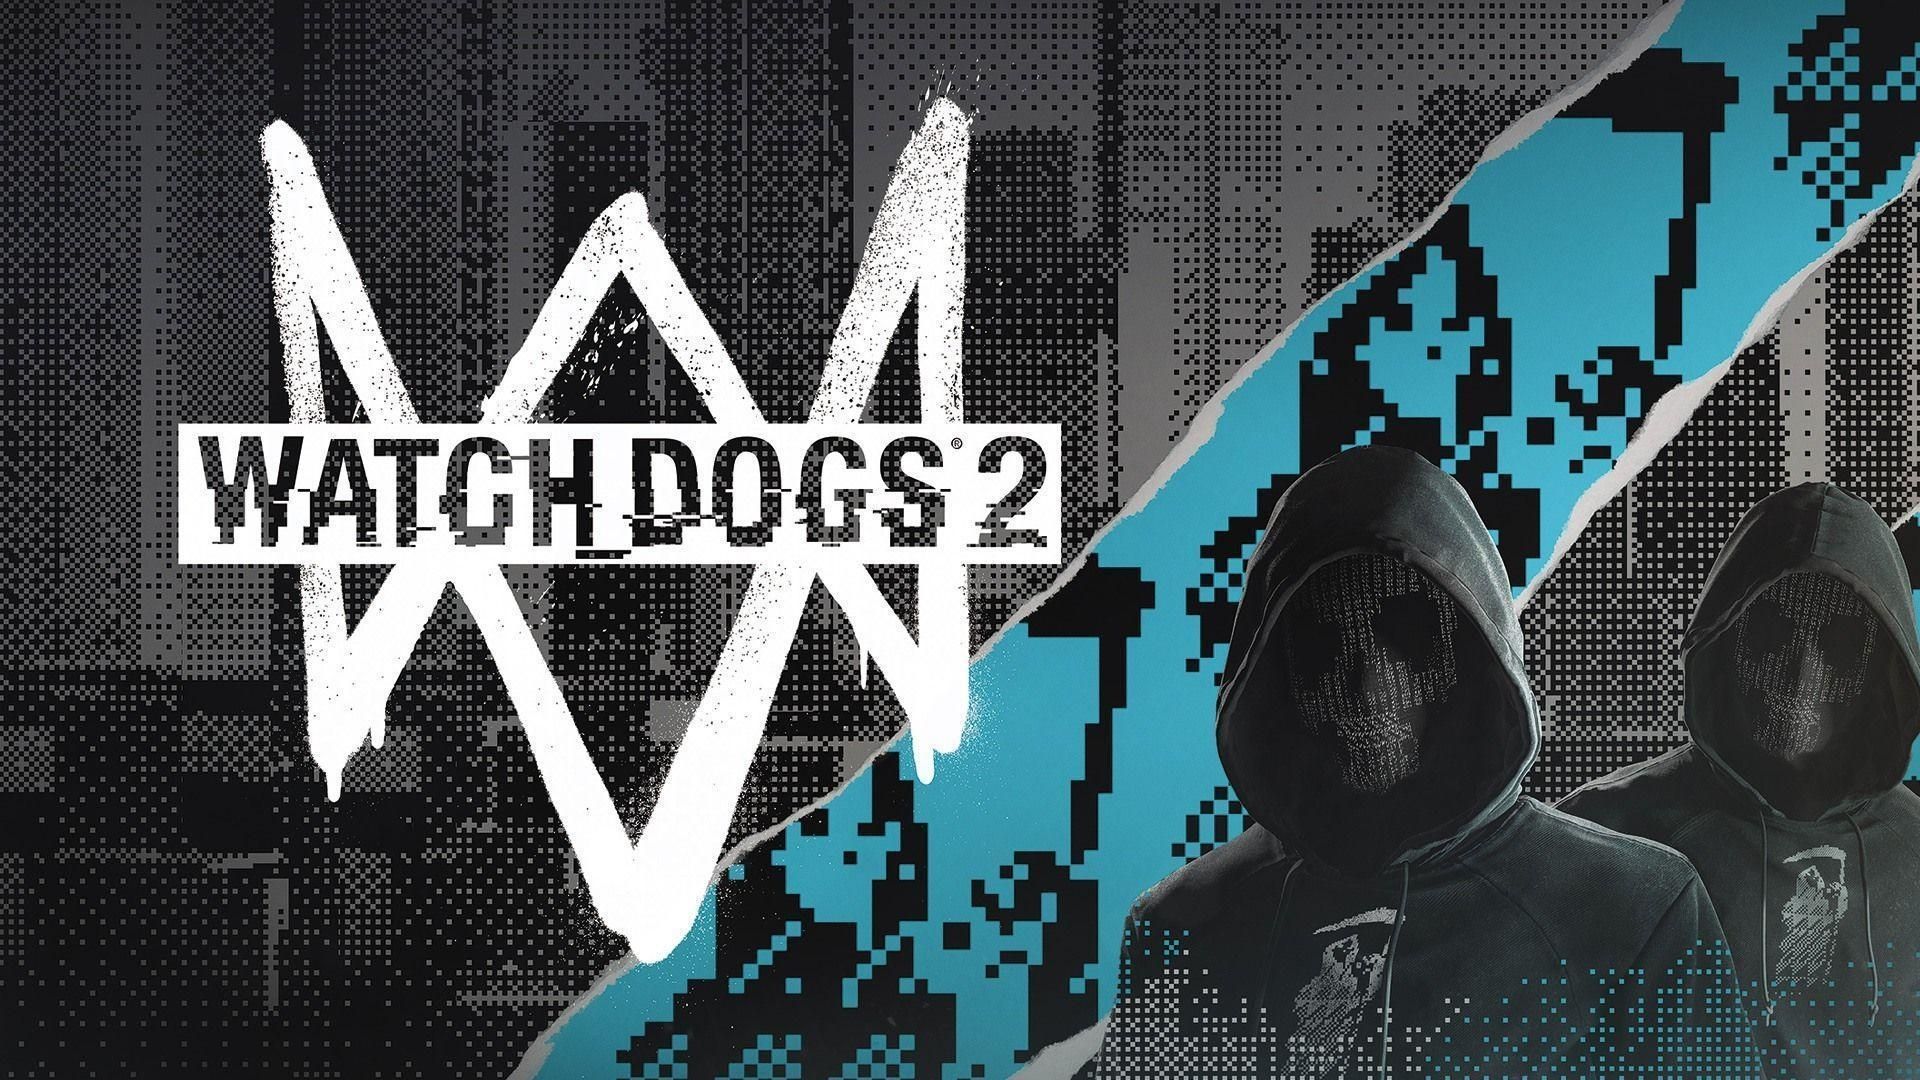 Cool Wath Dogs 2 Dedsec Wallpaper Dogs 2 Hacking, HD